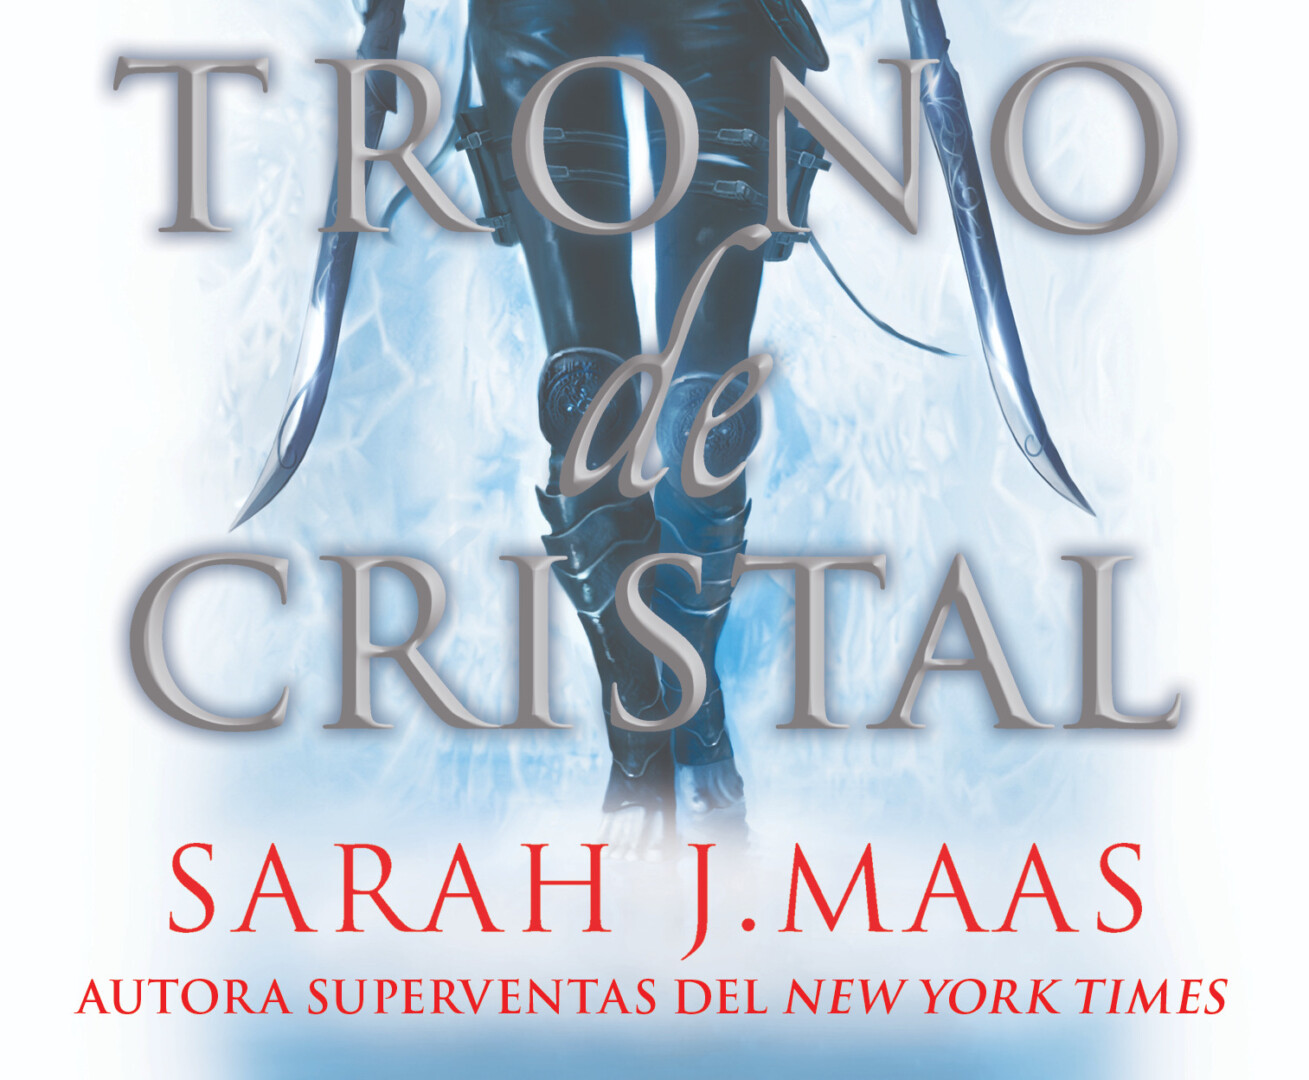 Trono de cristal (Trono de Cristal 1) Audiobook on